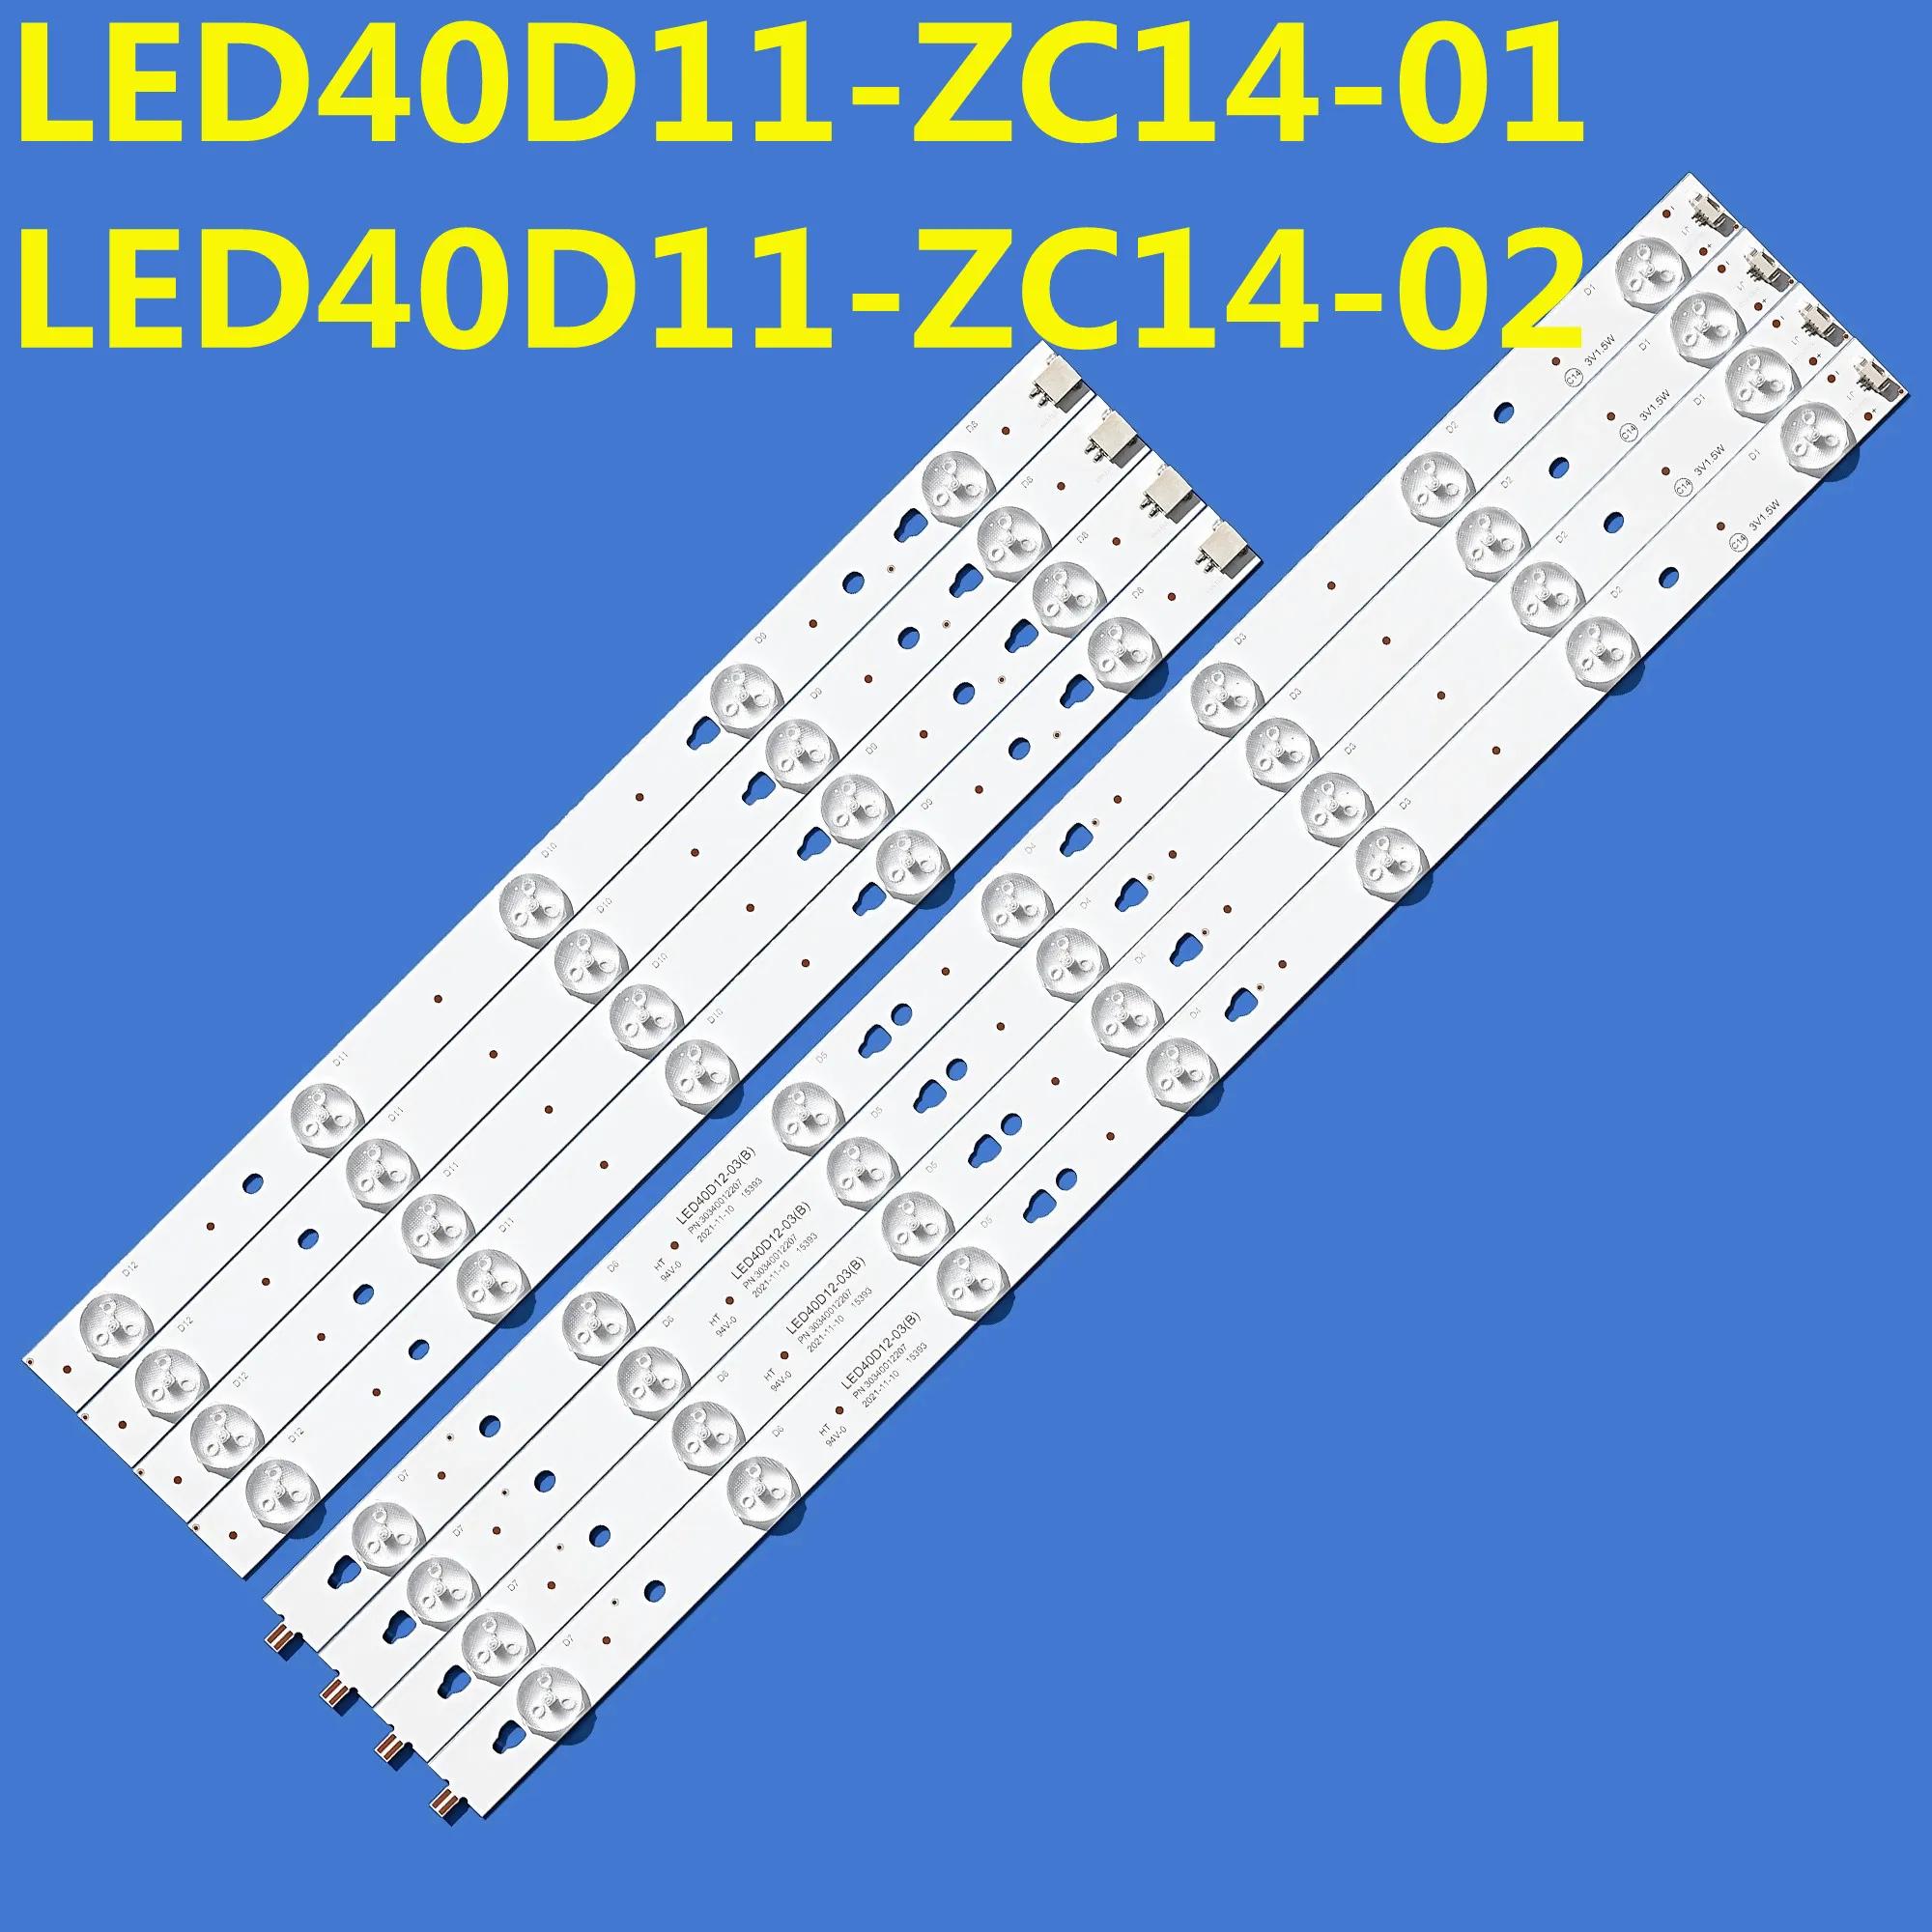 LED Ʈ Ʈ LED40D11-ZC14-01 LED40D11-ZC14-02 30340011202/201, LE40D8810 D40MF7090 LT-40M445 LT-40M645 LSC400HM06-8